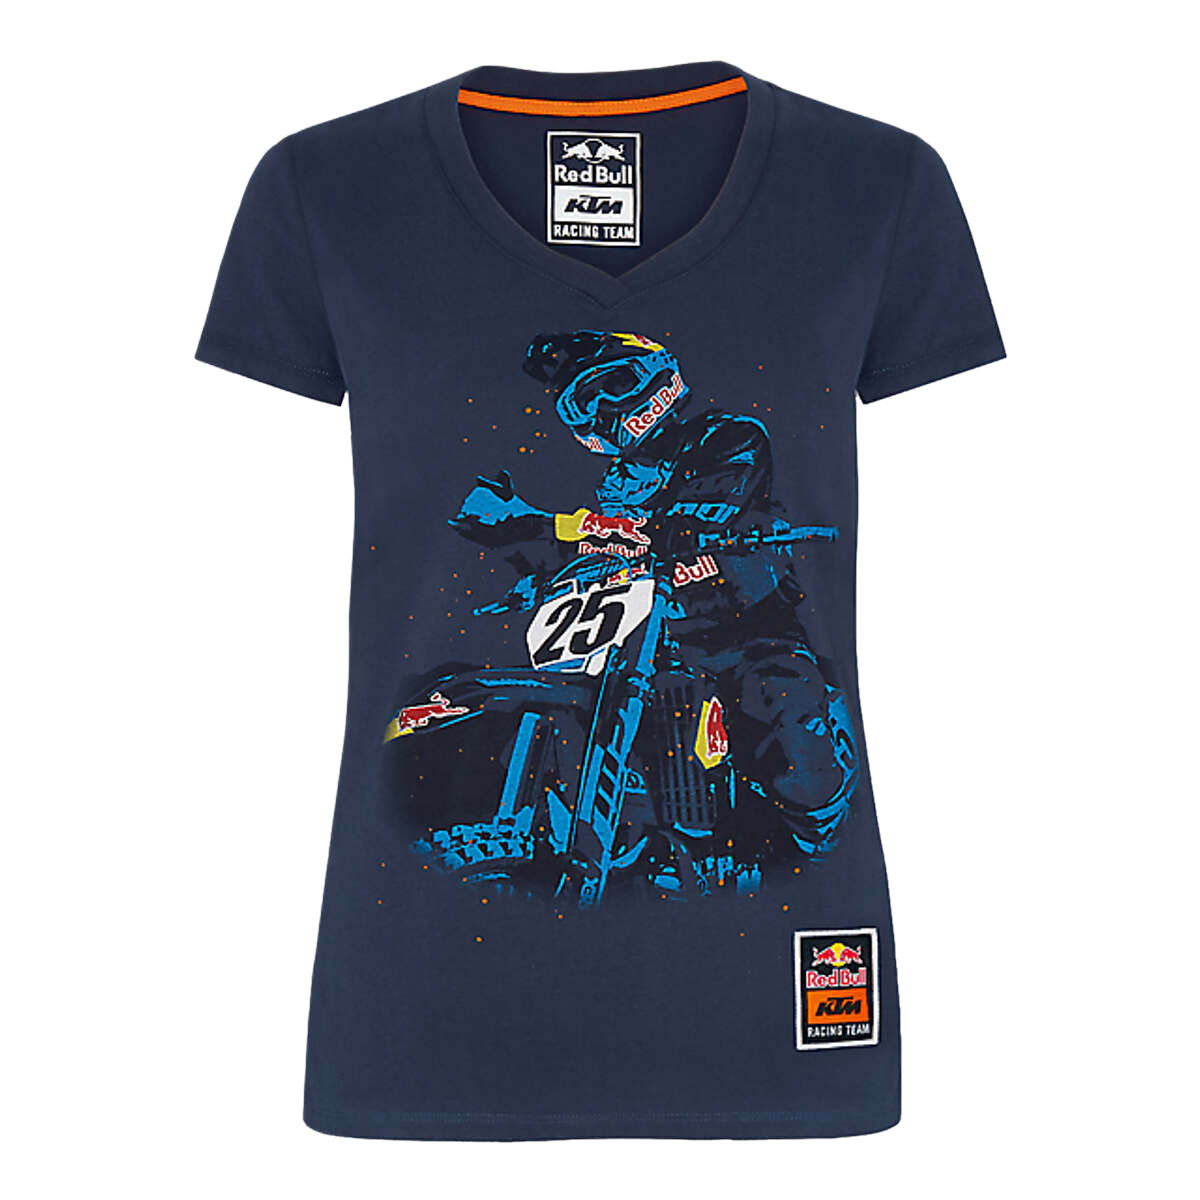 Red Bull Femme T-Shirt KTM Racing Team Musquin - Navy